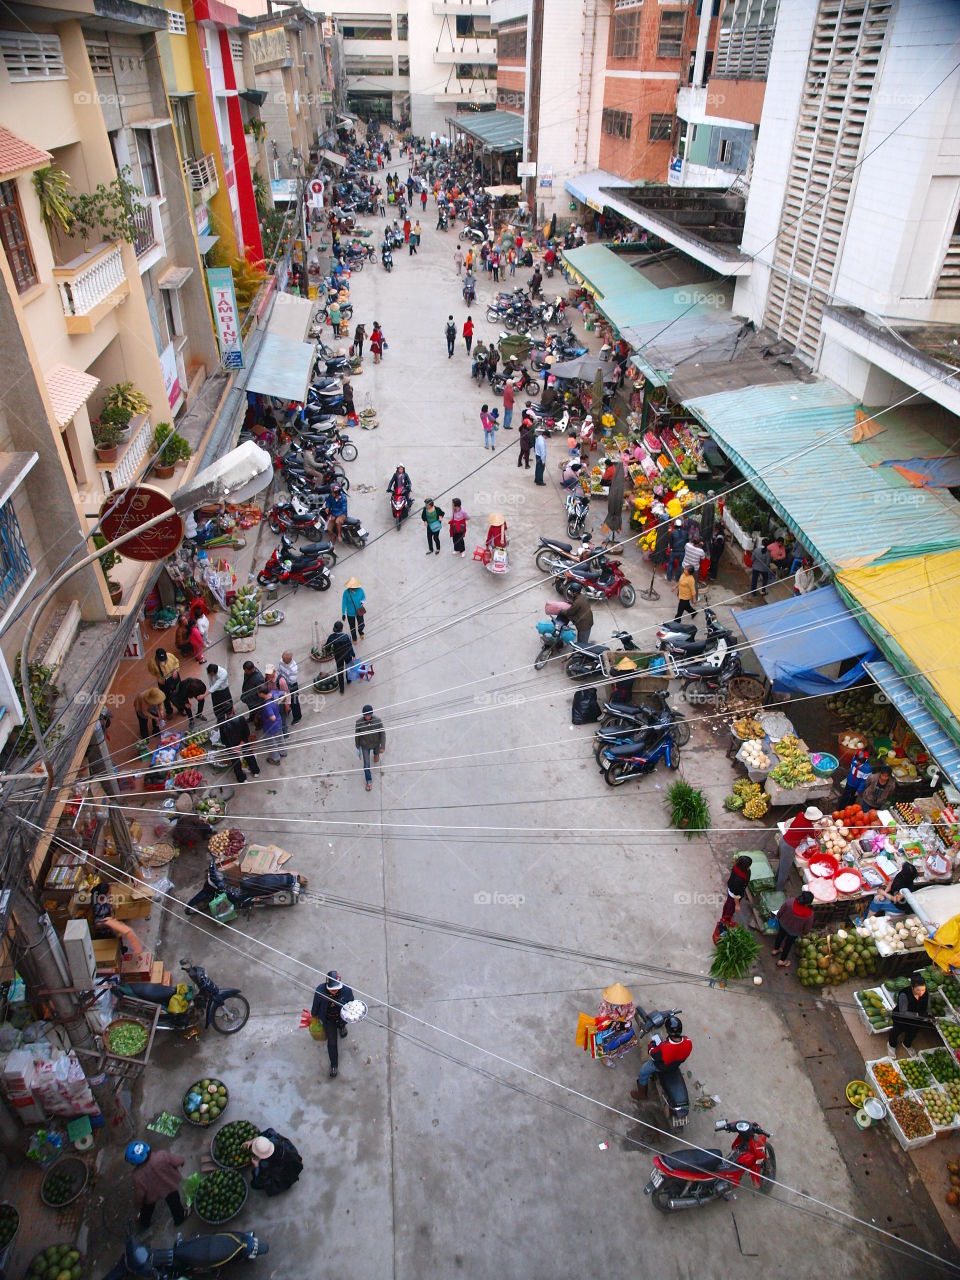 The Dalat city in Vietnam